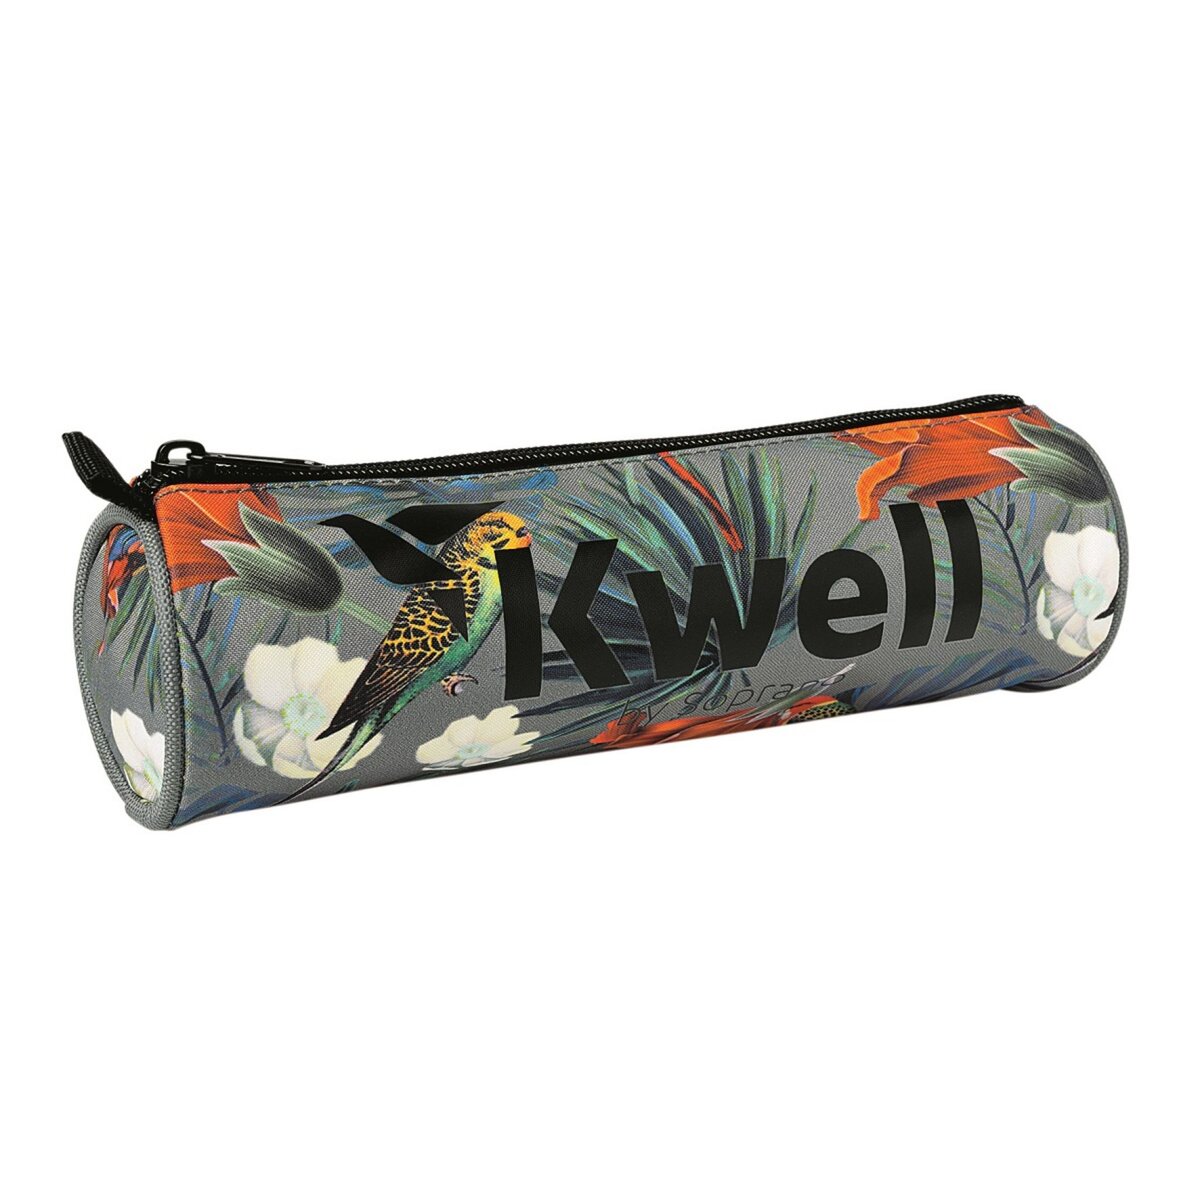 kwell Trousse ronde - 1 compartiment - 22x6cm - KWELL - Décor exotique fond gris